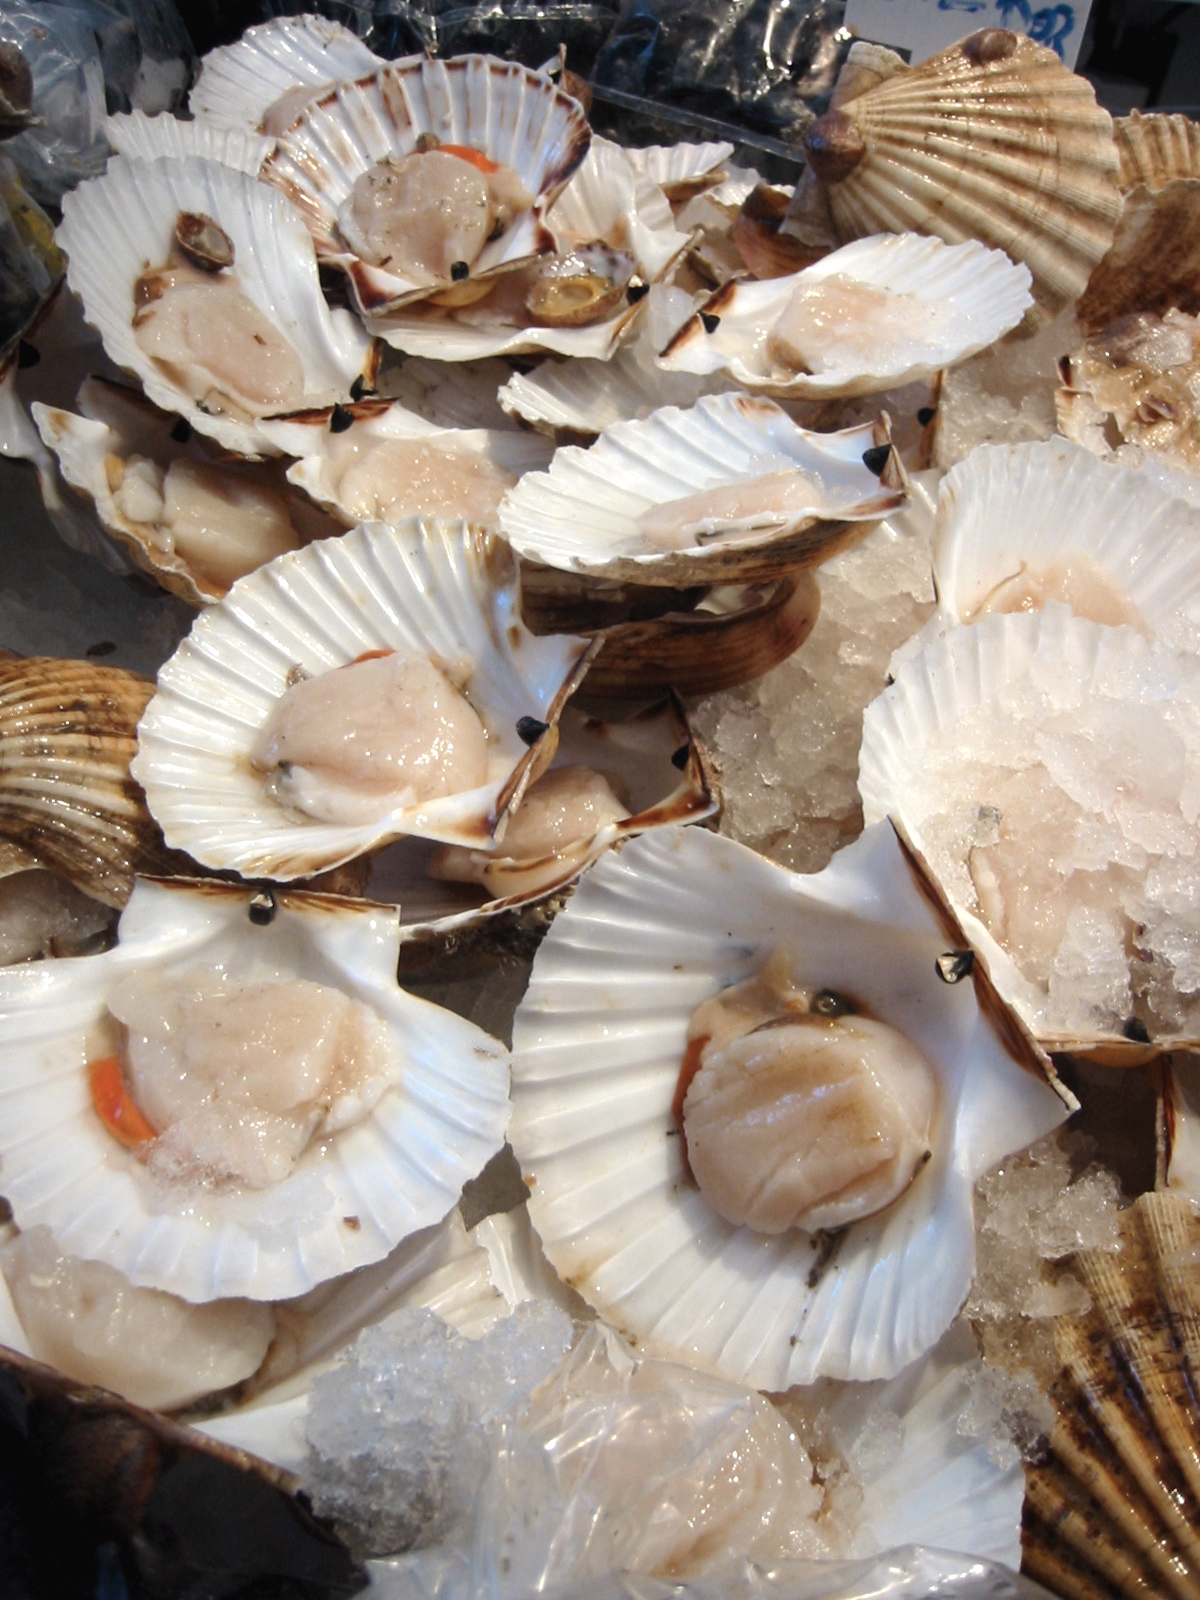 clams fill an array of seashells on ice